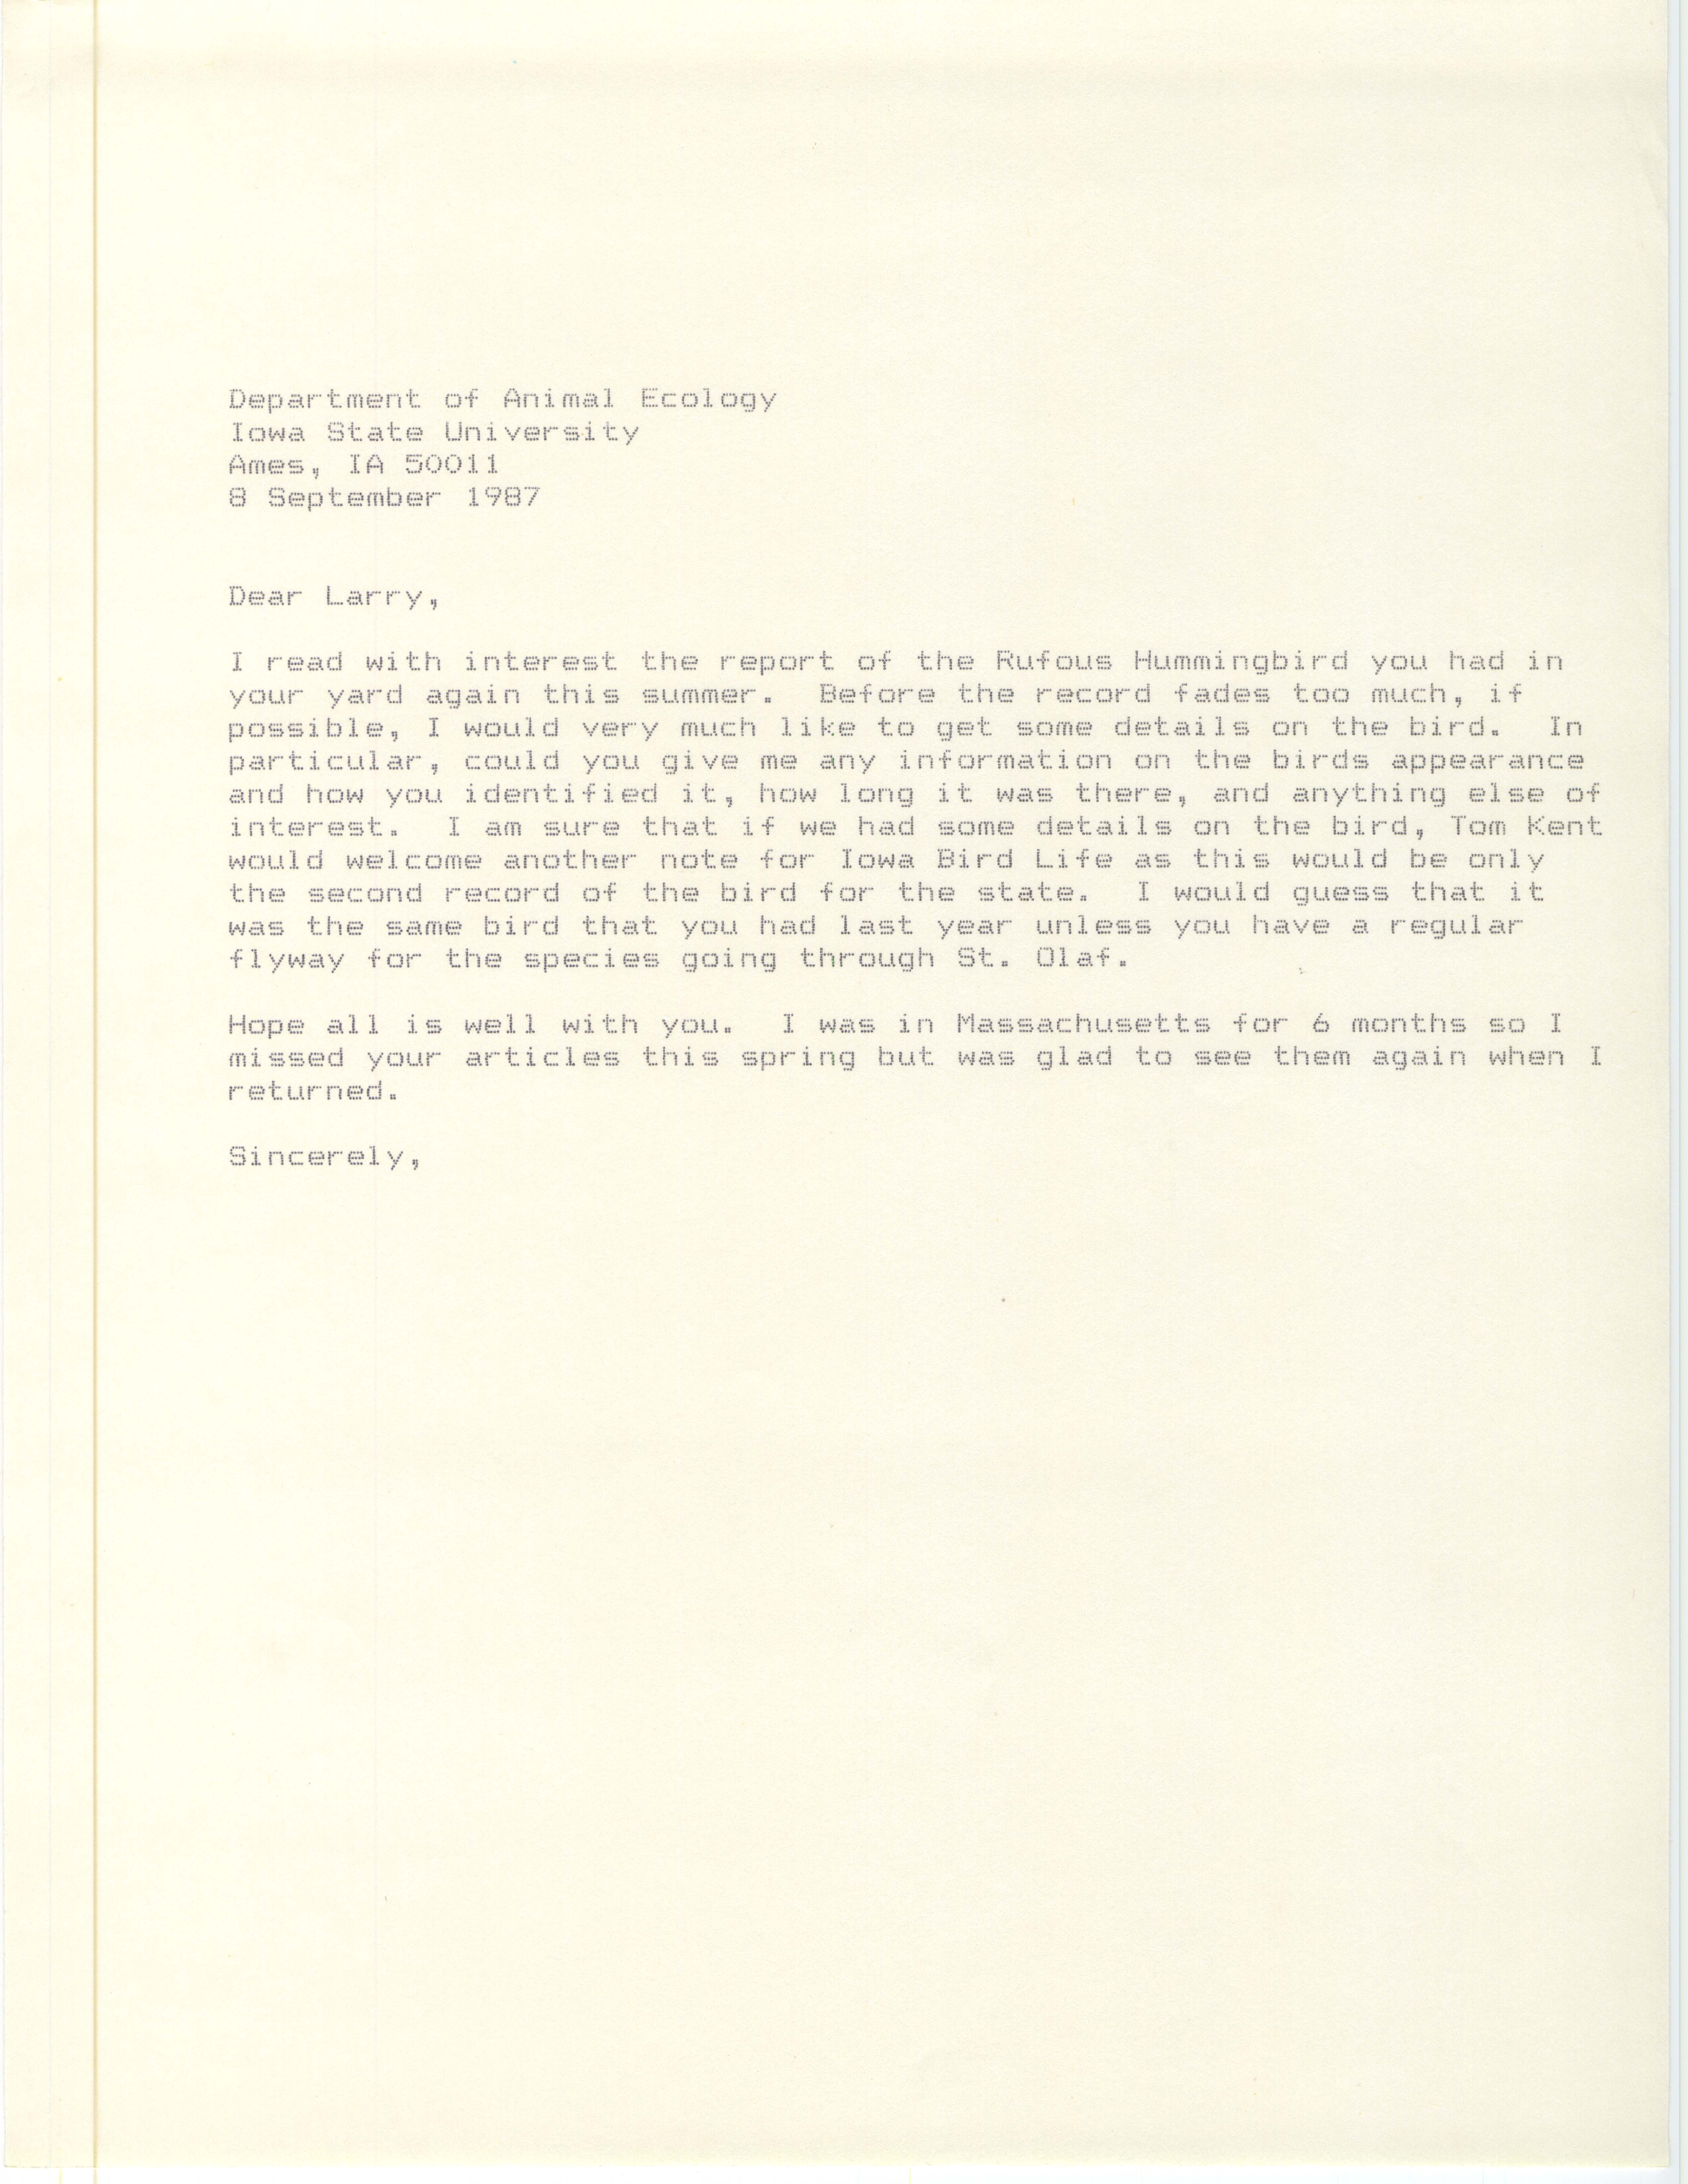 James J. Dinsmore letter to Larry Stone regarding a Rufous Hummingbird sighting, September 8, 1987